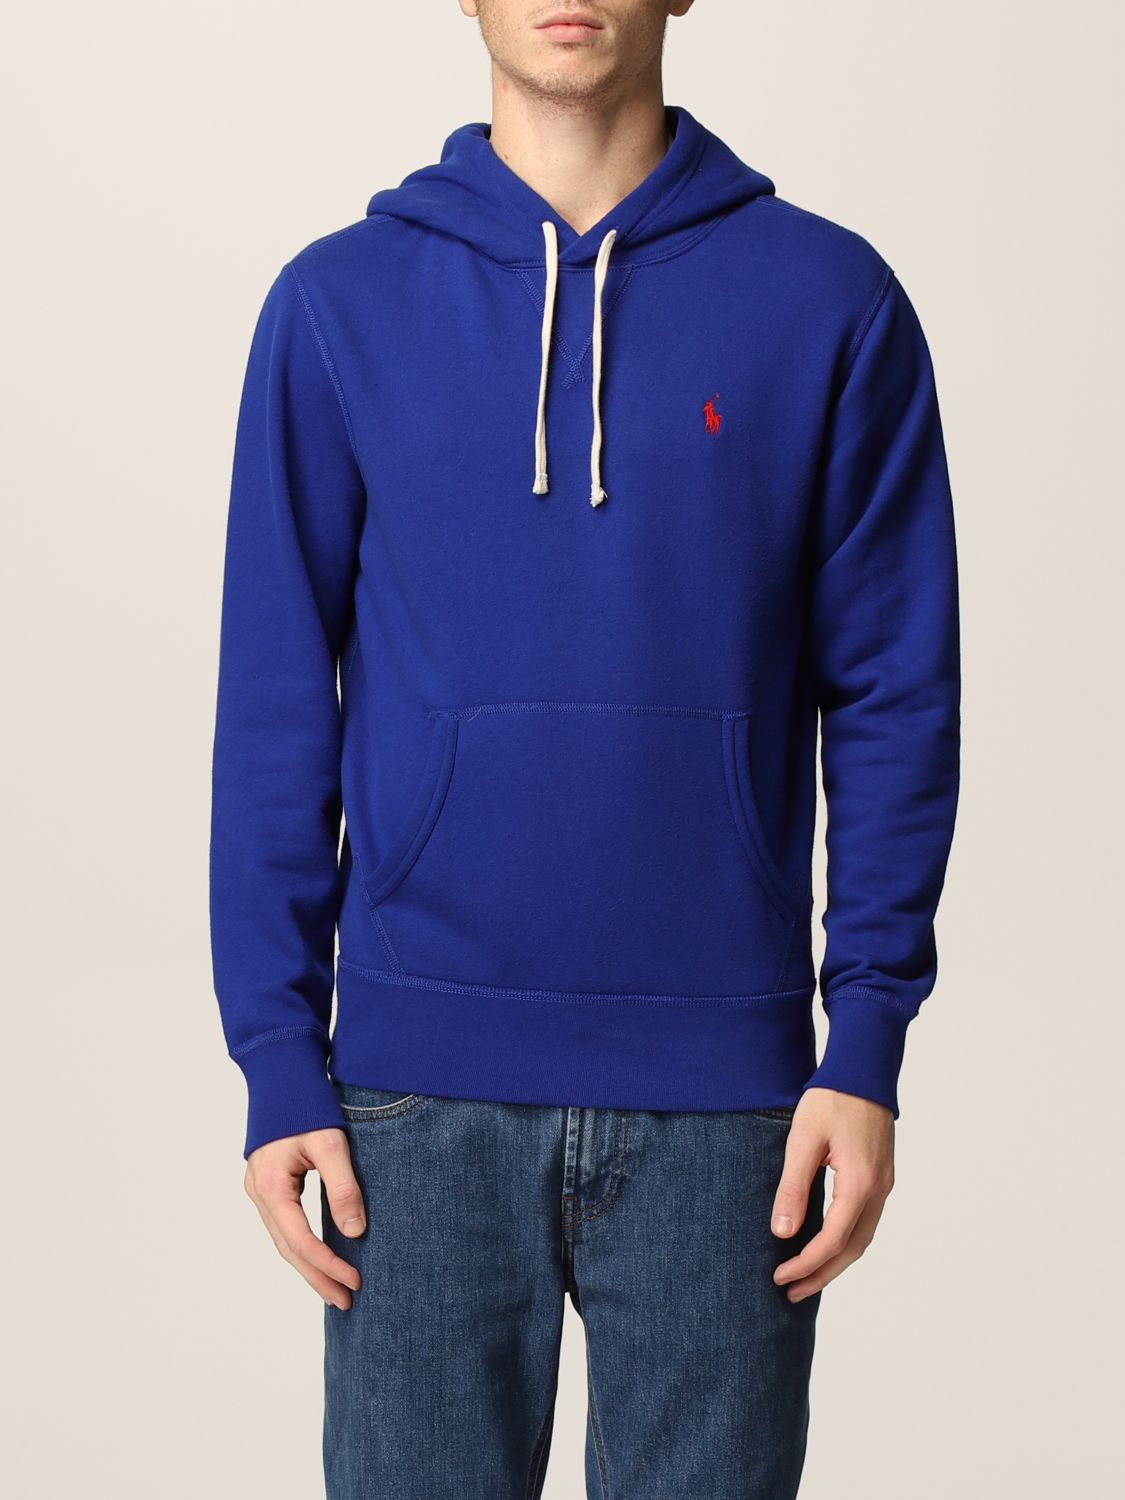 POLO RALPH LAUREN: jumper with logo - Royal Blue | Polo Ralph Lauren  sweatshirt 710766778 online on 